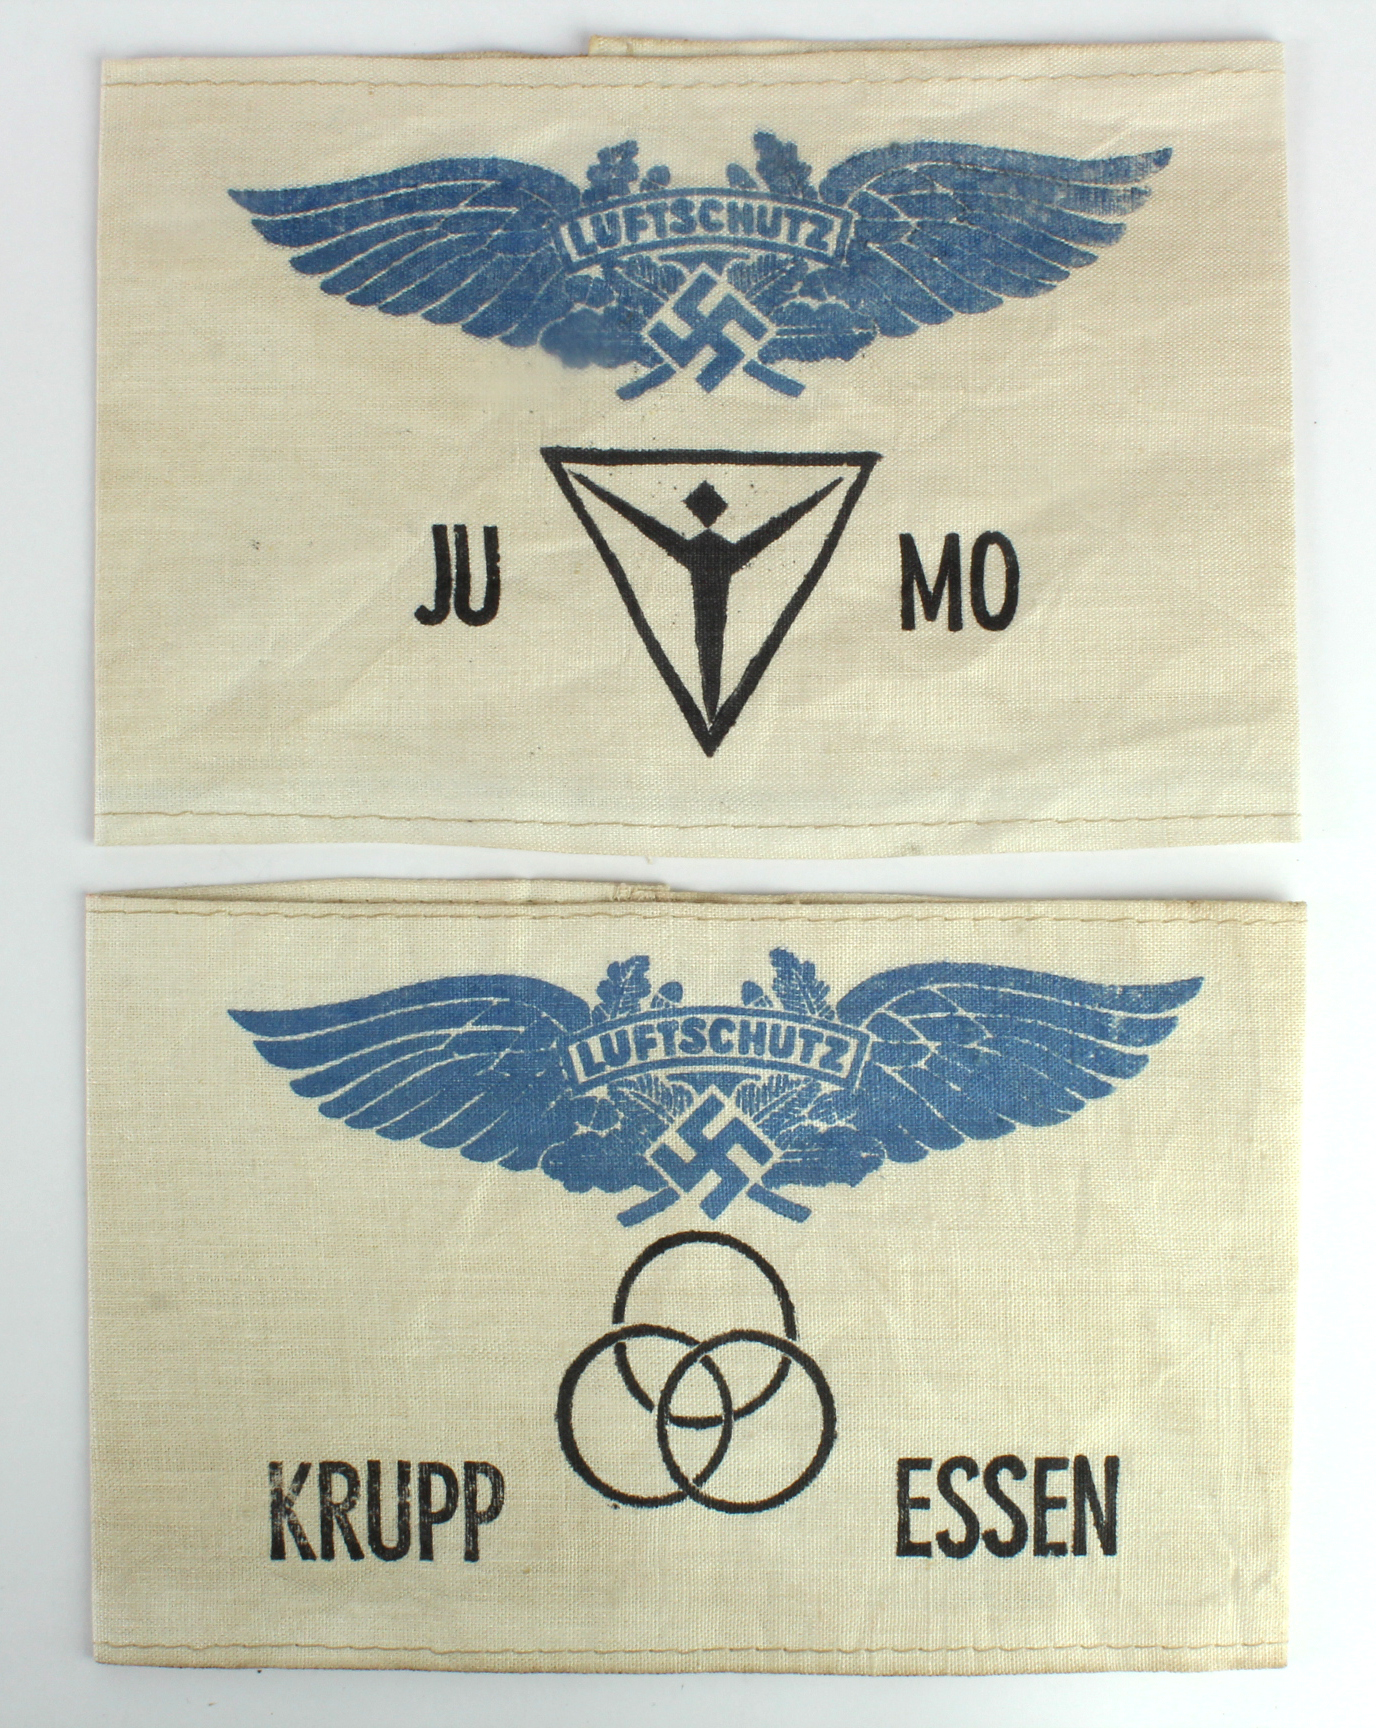 German armbands for Juno and Krupp Air Raid precautions.